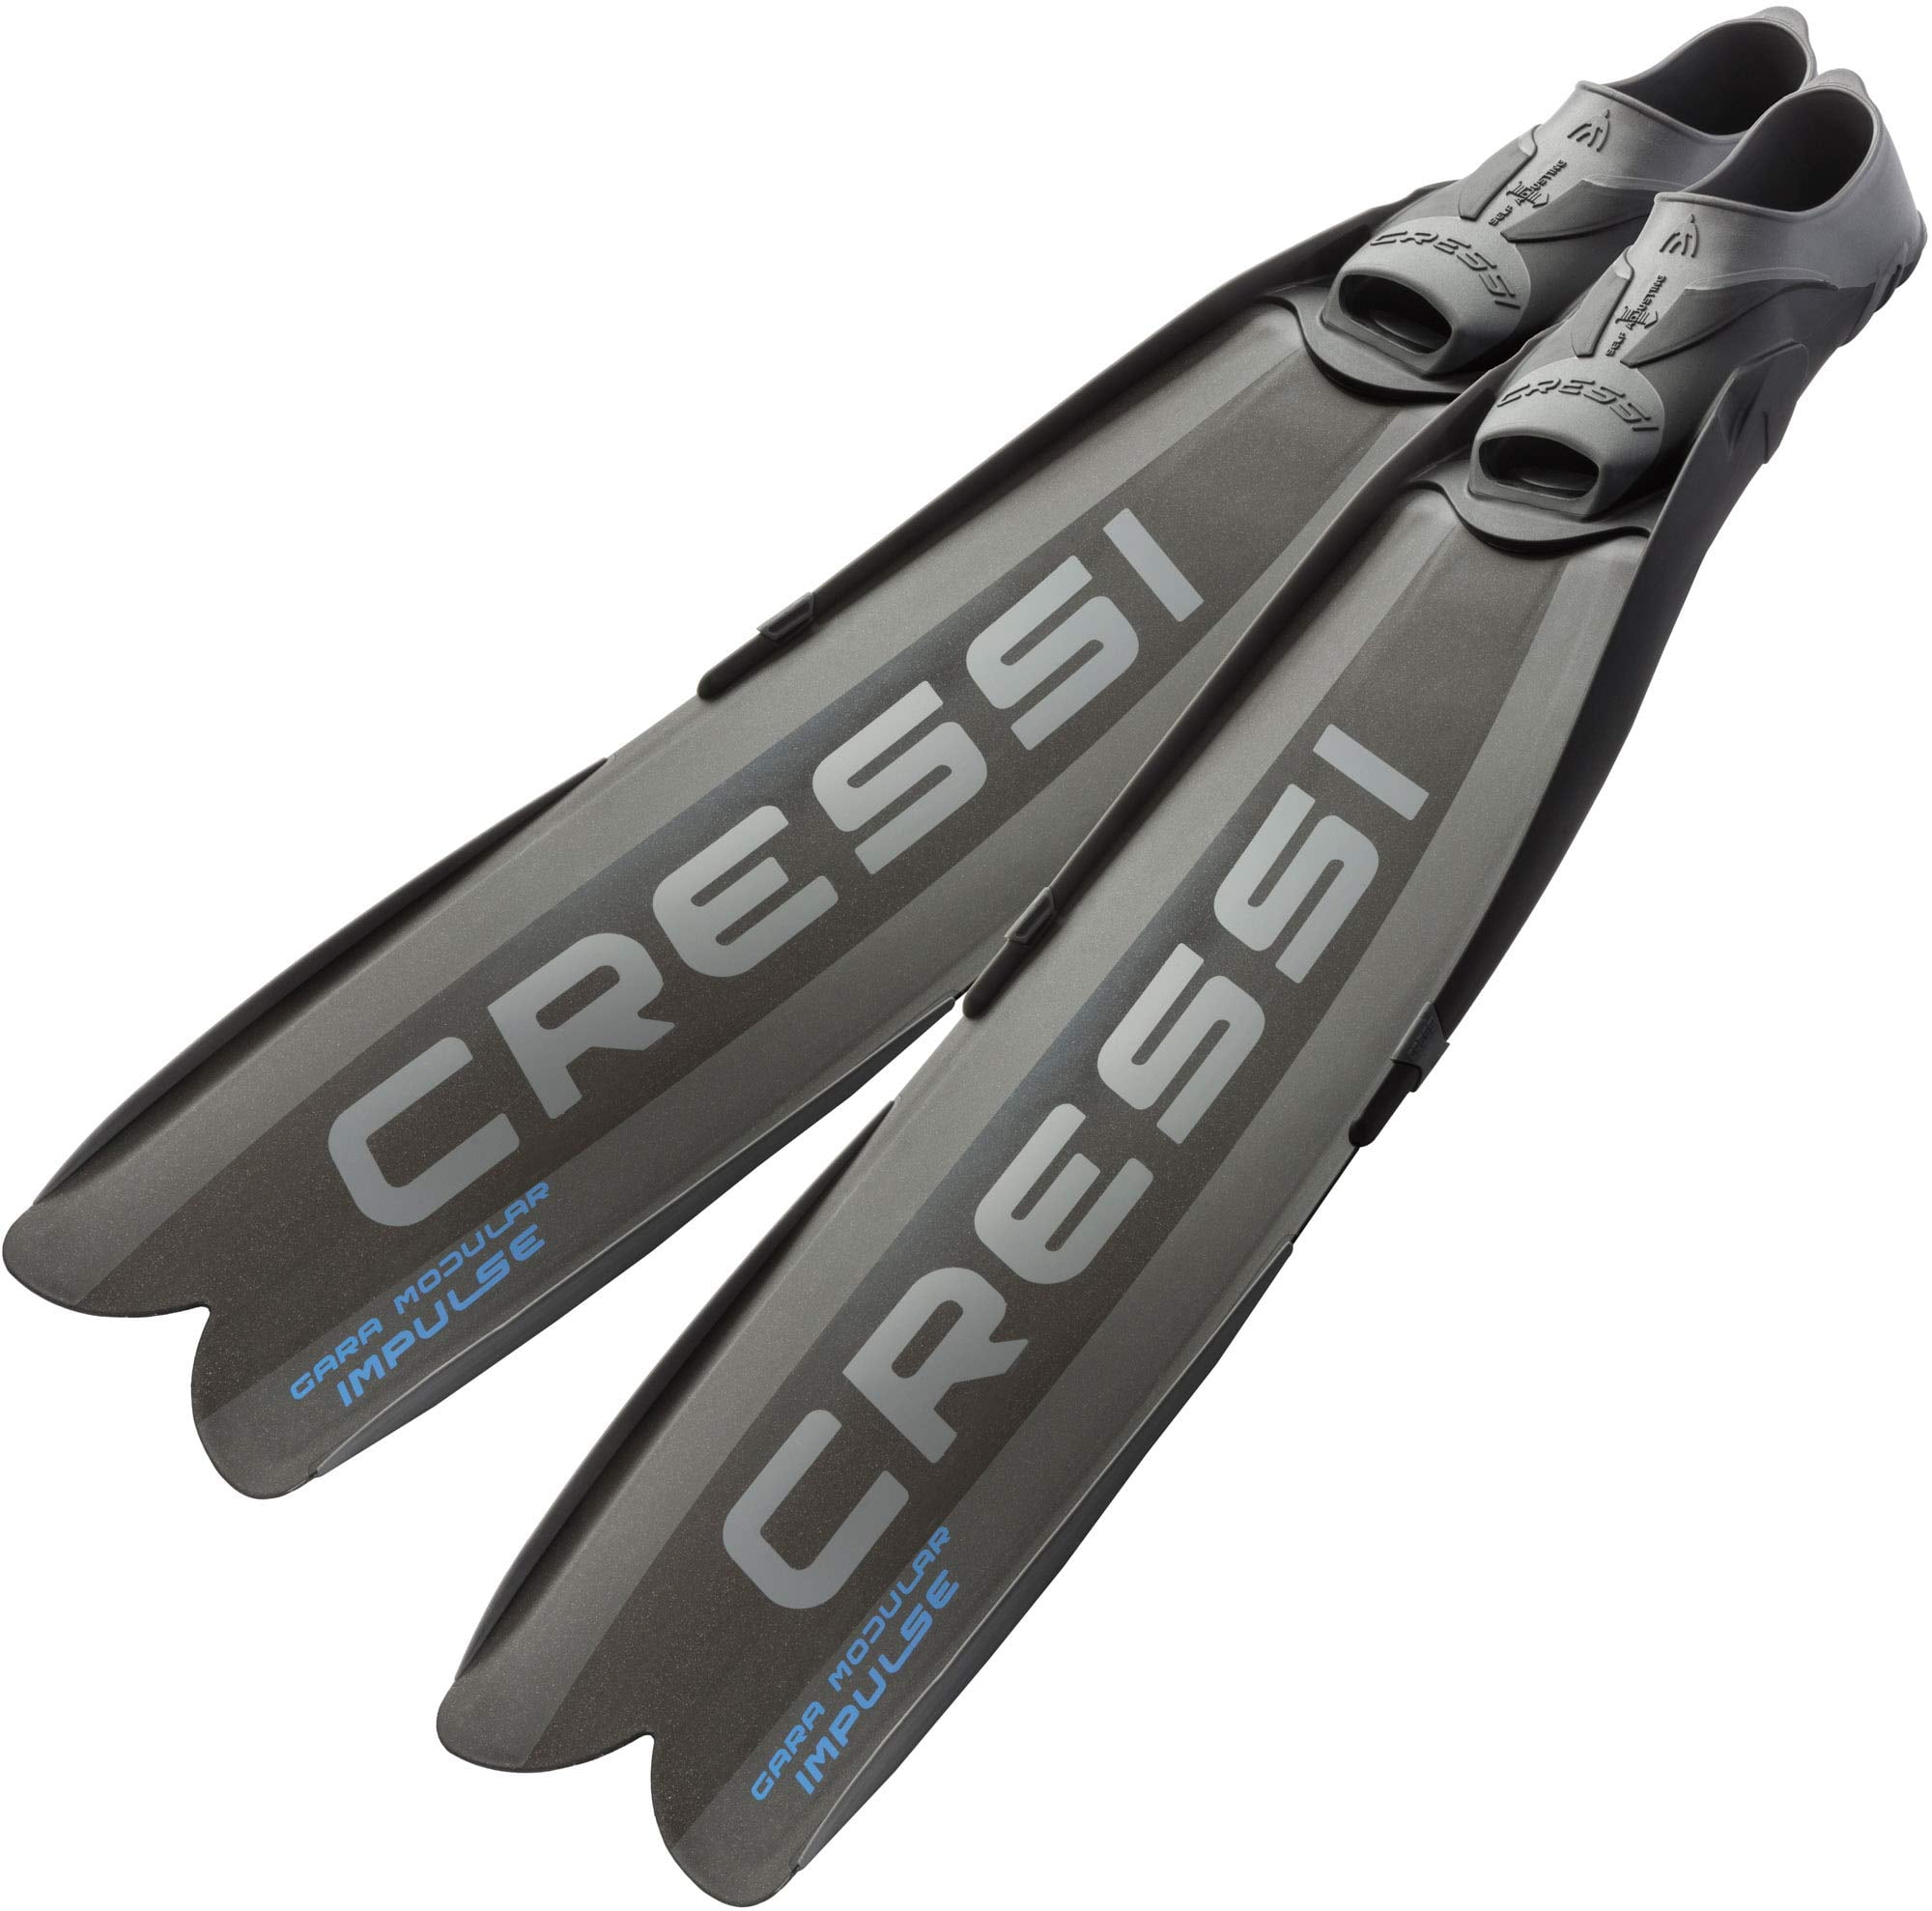 CRESSI-SUB Rondine Pro Size US 5-6 / EUR 38-39 Scuba Dive